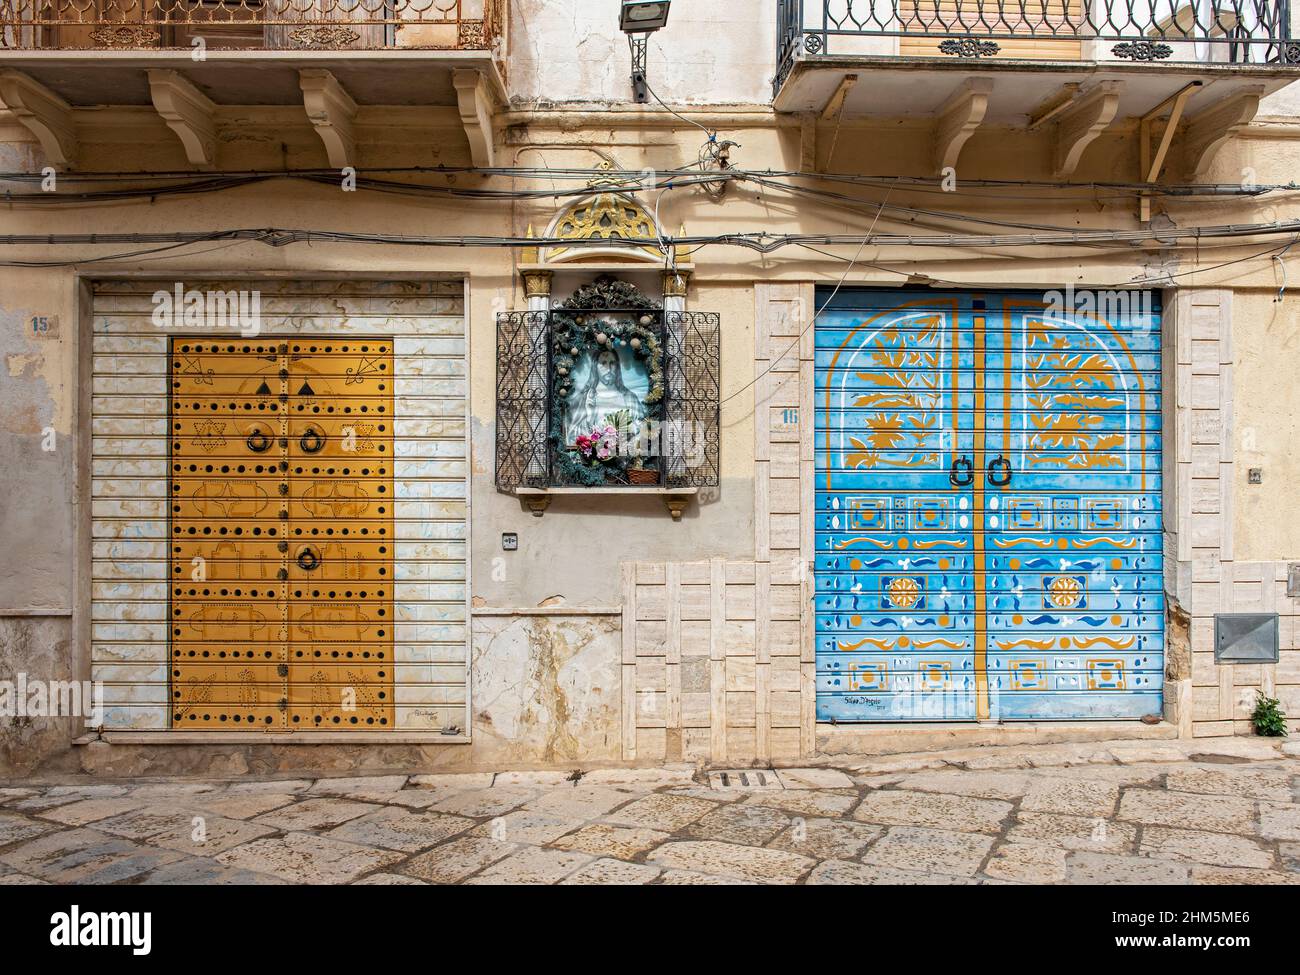 Bunt bemalte Rollläden auf Schaufenster, Kasbah Mazara del Vallo, Sizilien, Italien Stockfoto